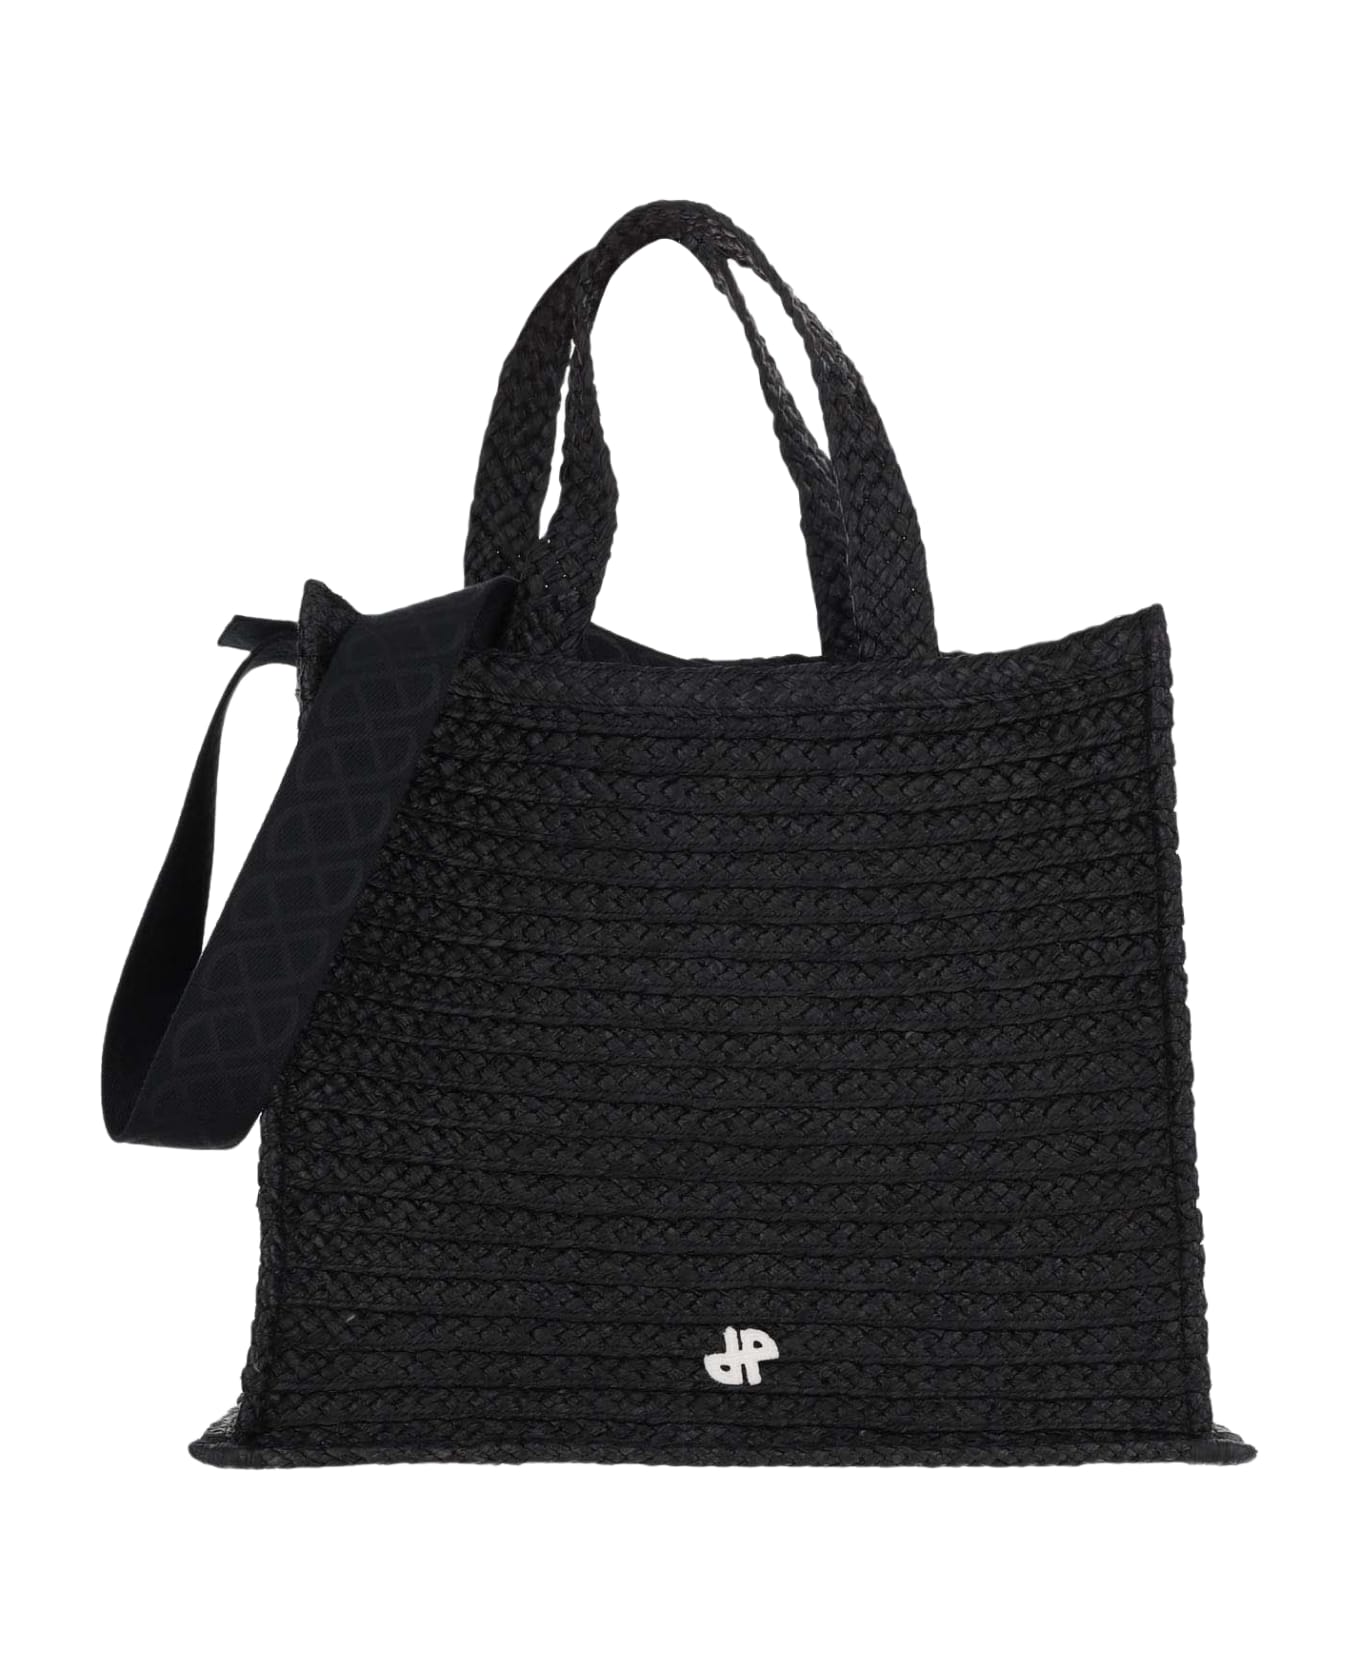 Patou Large Jp Tote Bag - Black トートバッグ